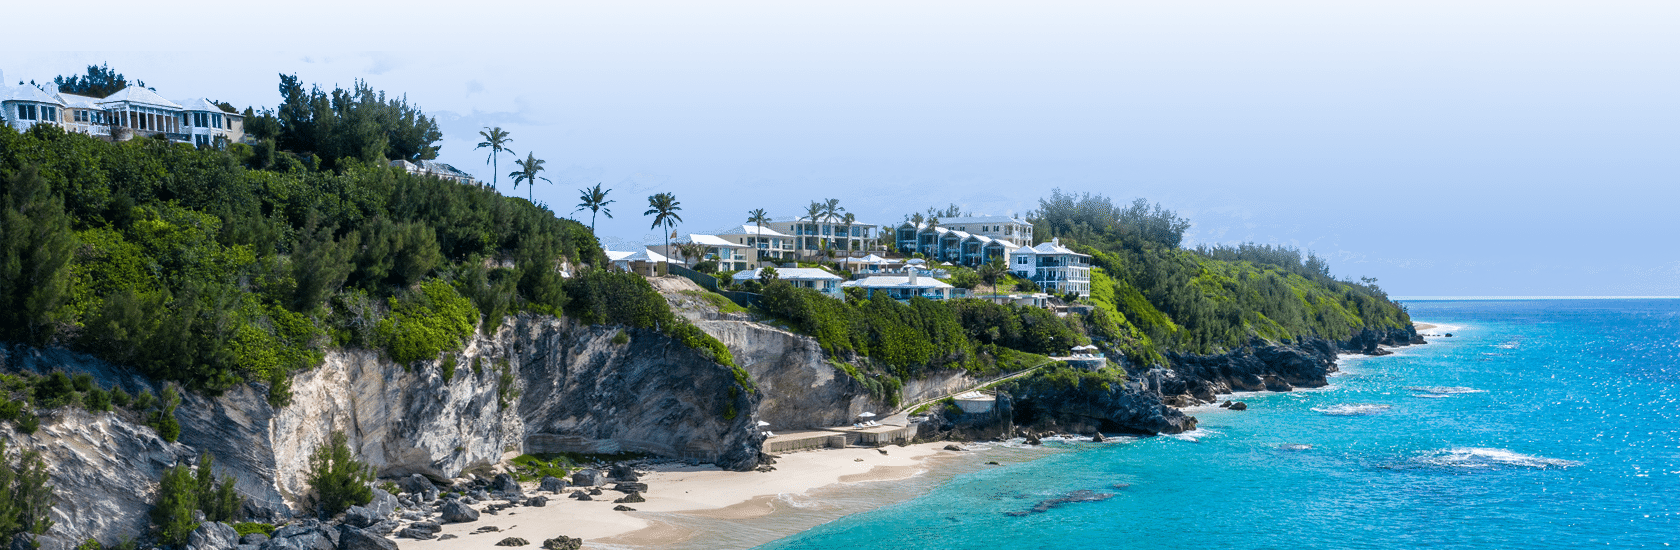 Bermuda island